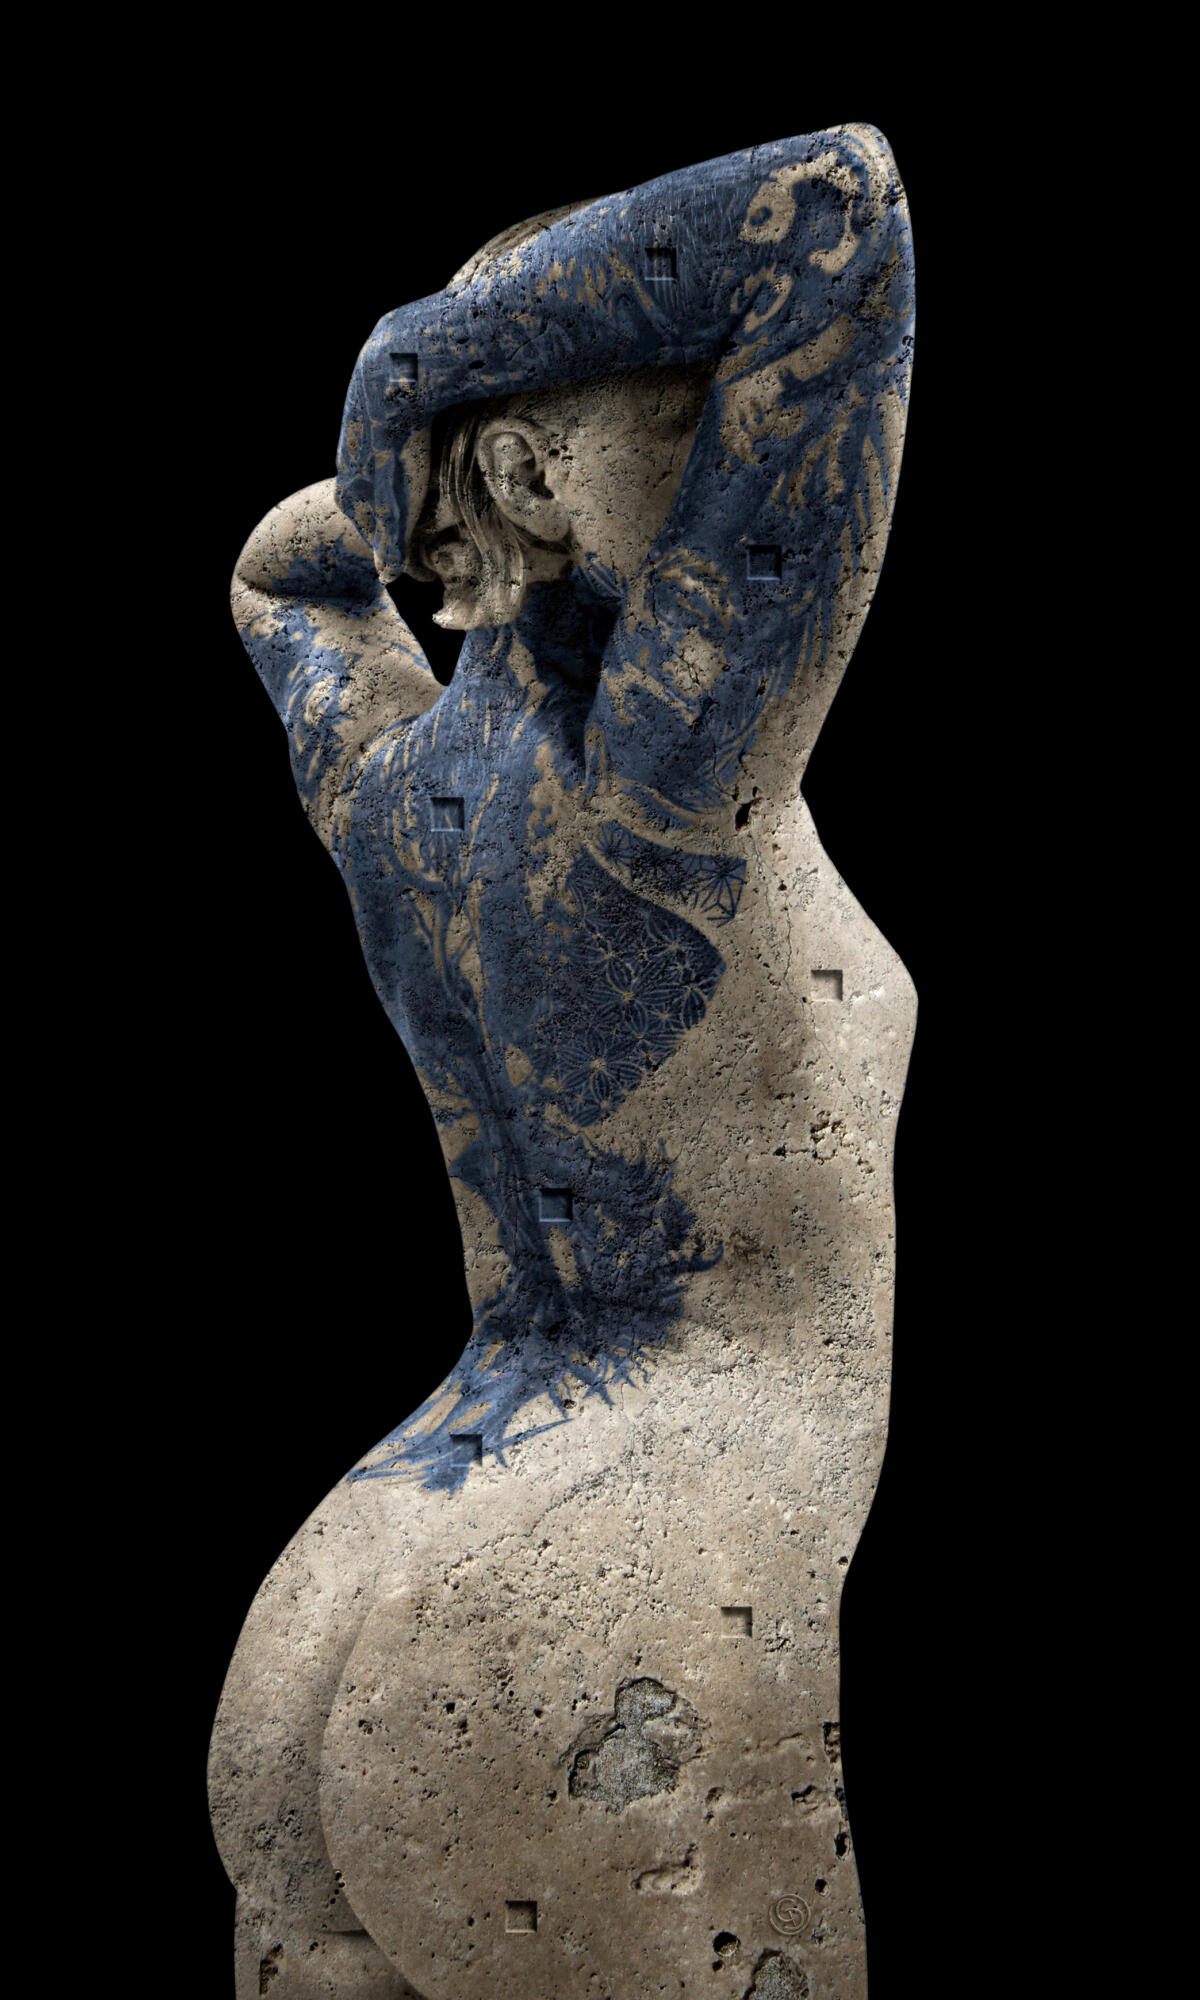 See "Inked Stone II" of Georges Dumas